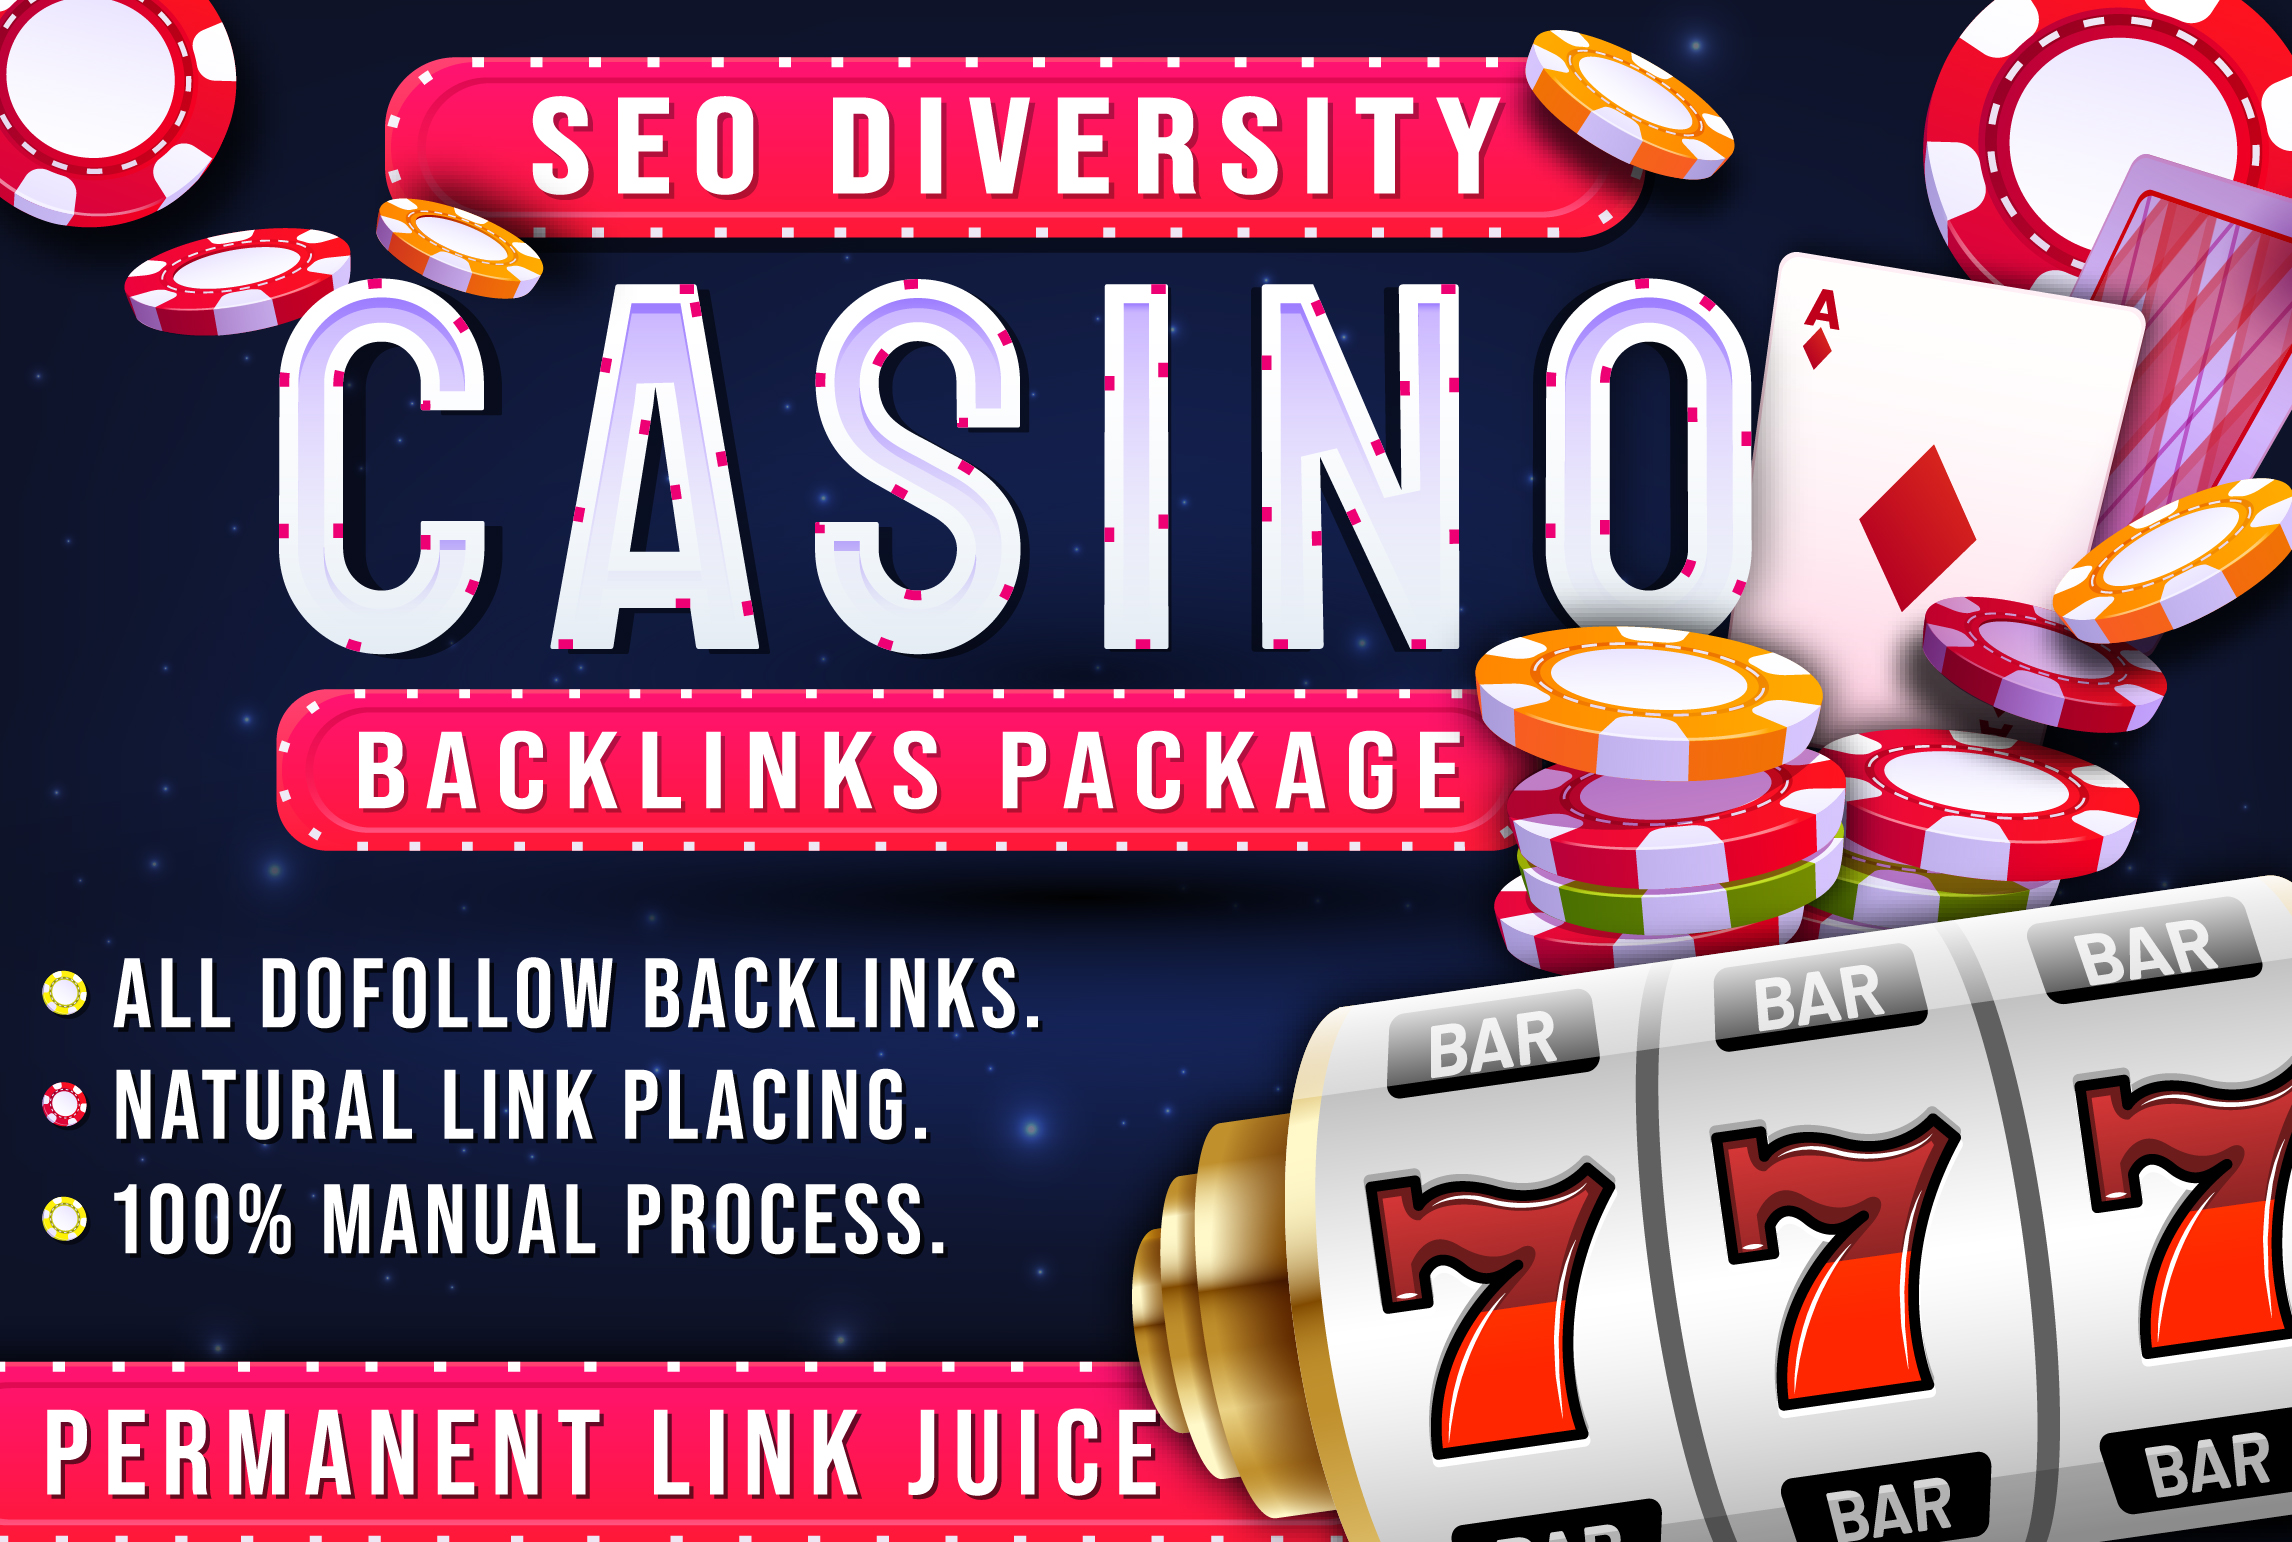 SEO Diversity Casino Backlinks Package - Google 1st page Guaranteed